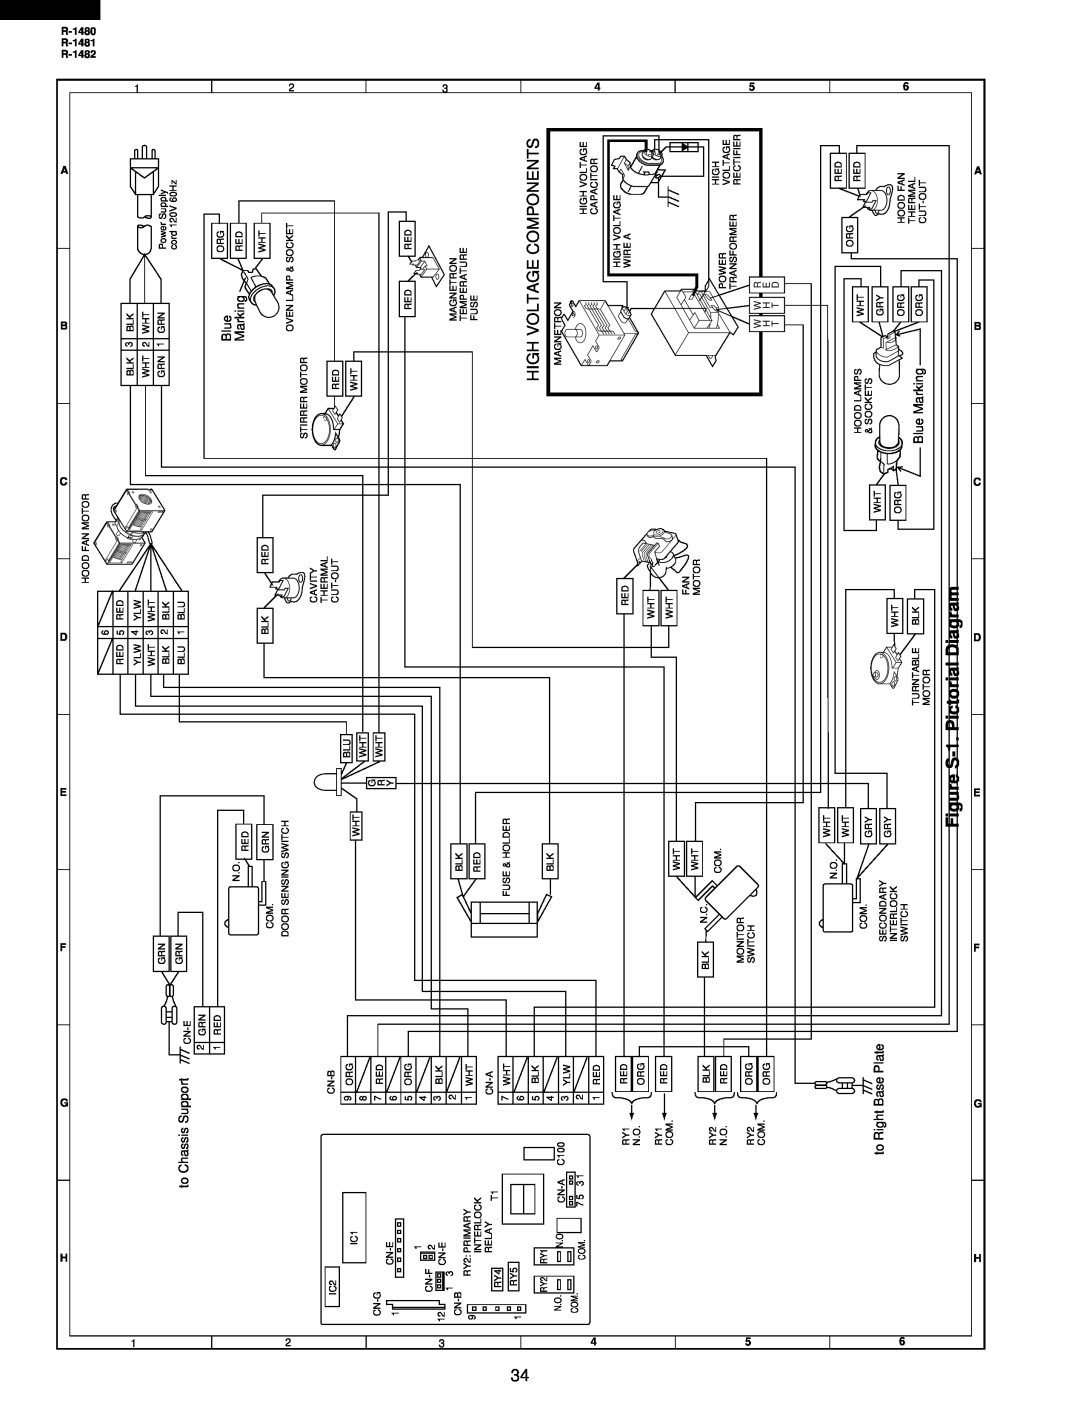 Sharp service manual Figure S-1.Pictorial Diagram, High Voltage Components, R-1480 R-1481 R-1482 